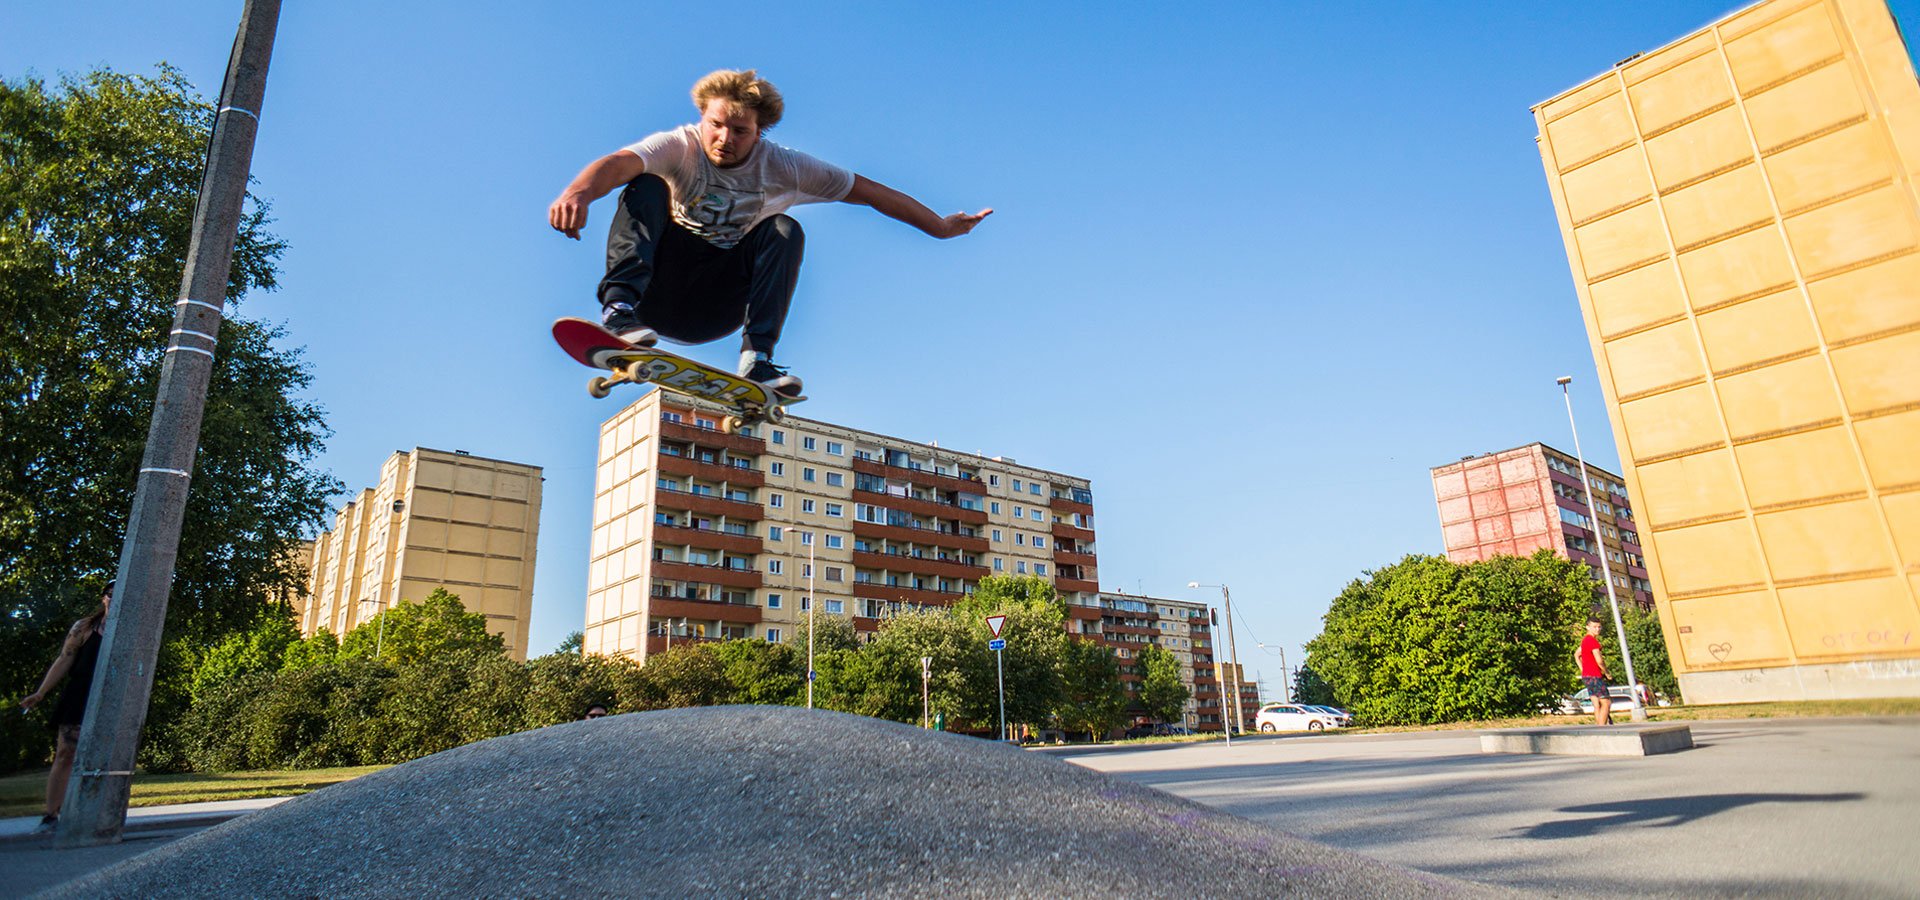 Meet the architect turning Estonia into a skateboarder’s paradise 